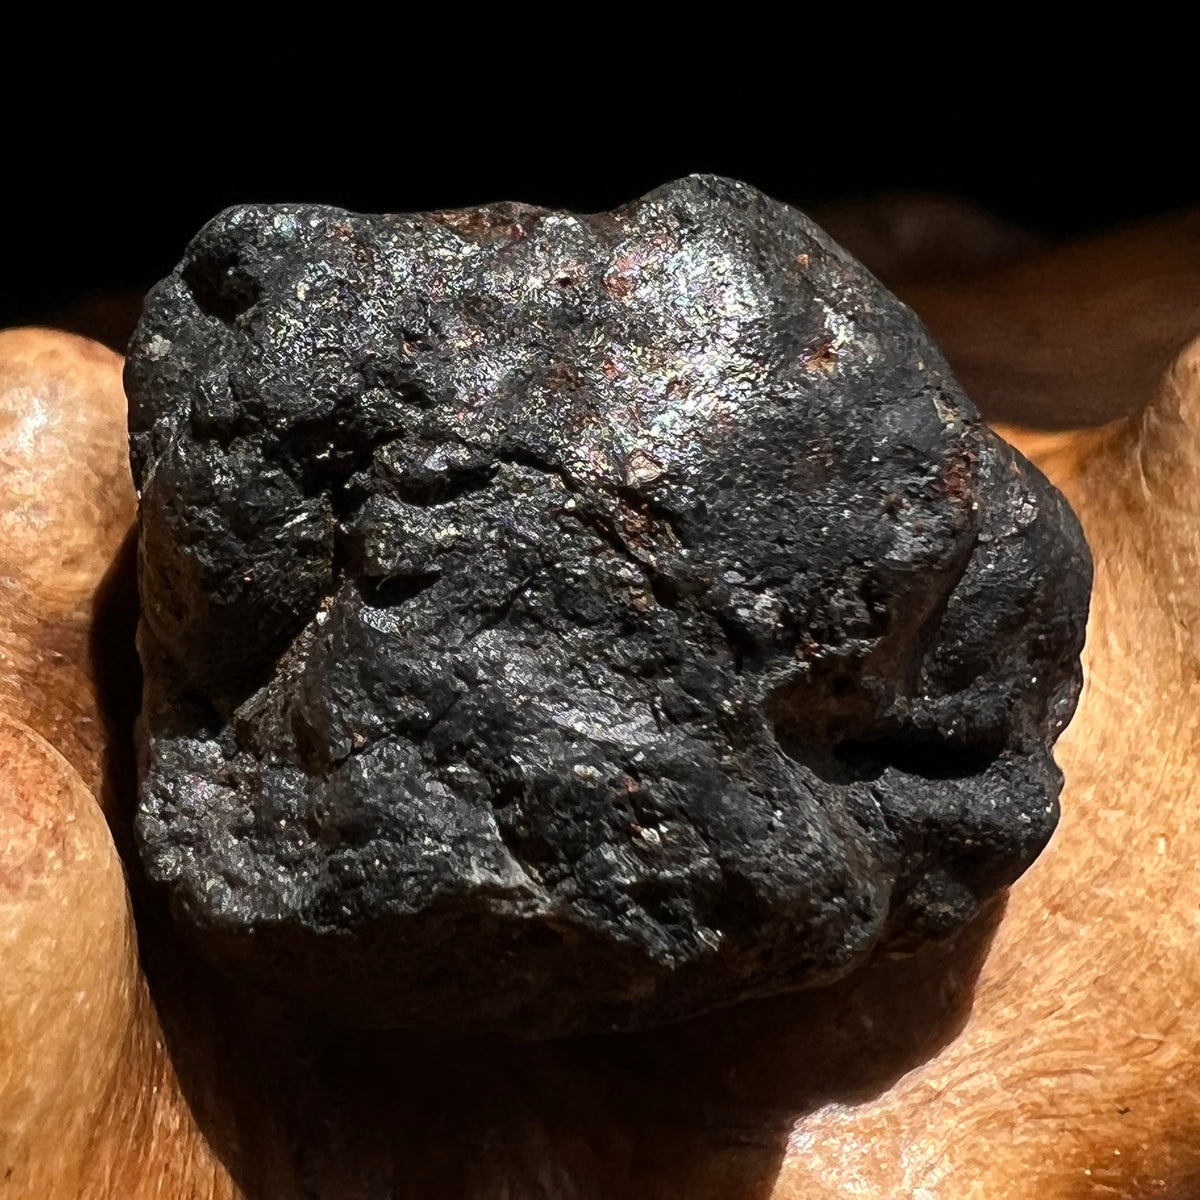 Chelyabinsk Meteorite Superbolide Asteroid 3.9 grams #24-Moldavite Life